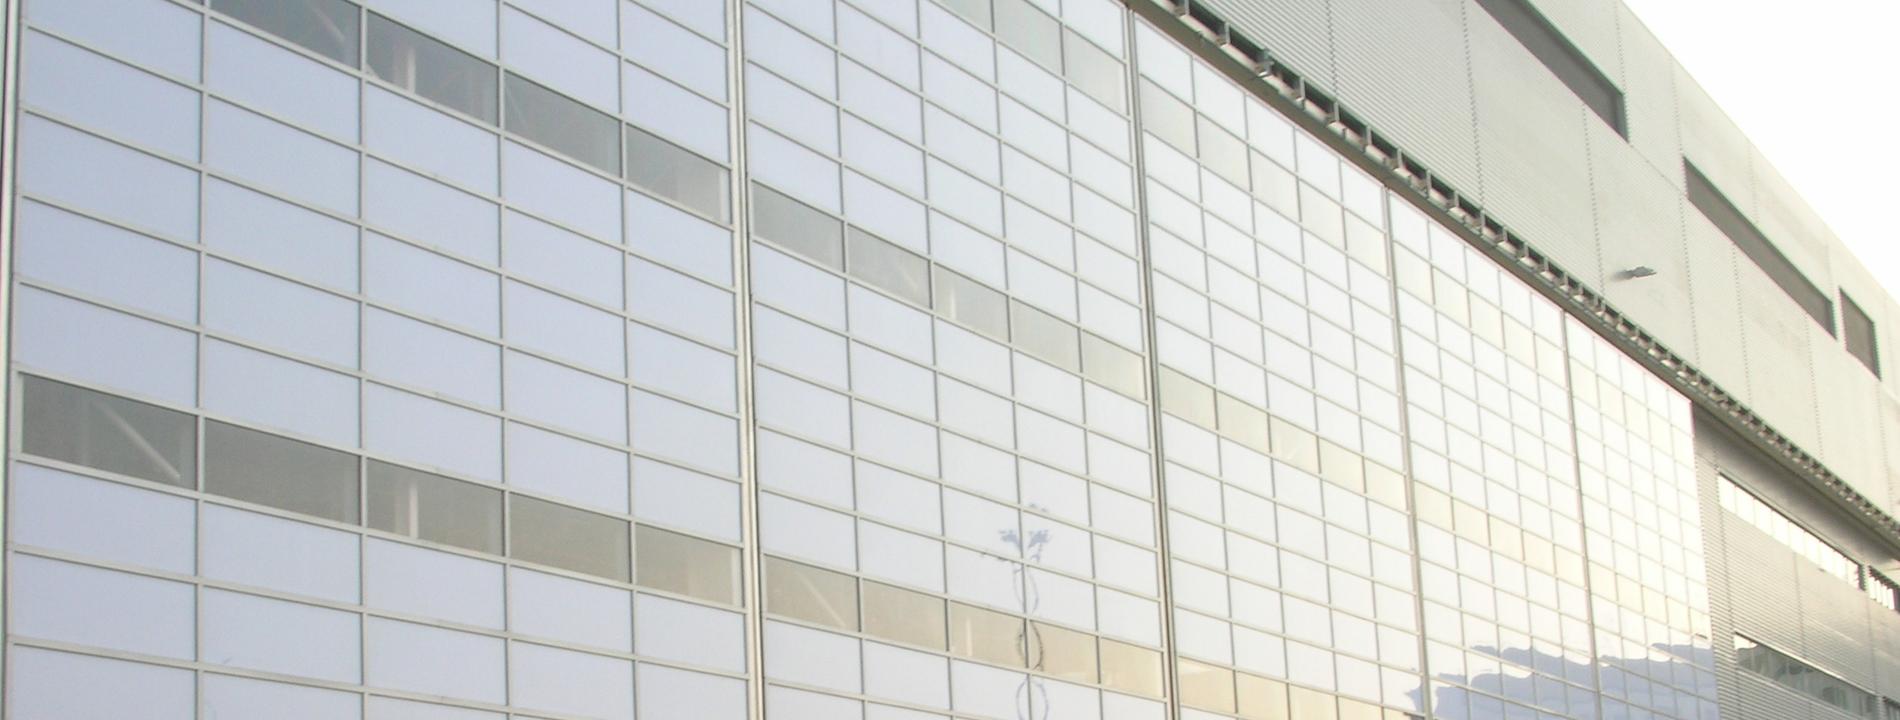 Clear Solid Plastic Polycarbonate Sheet Skylight Greenhouse Window Glazing 